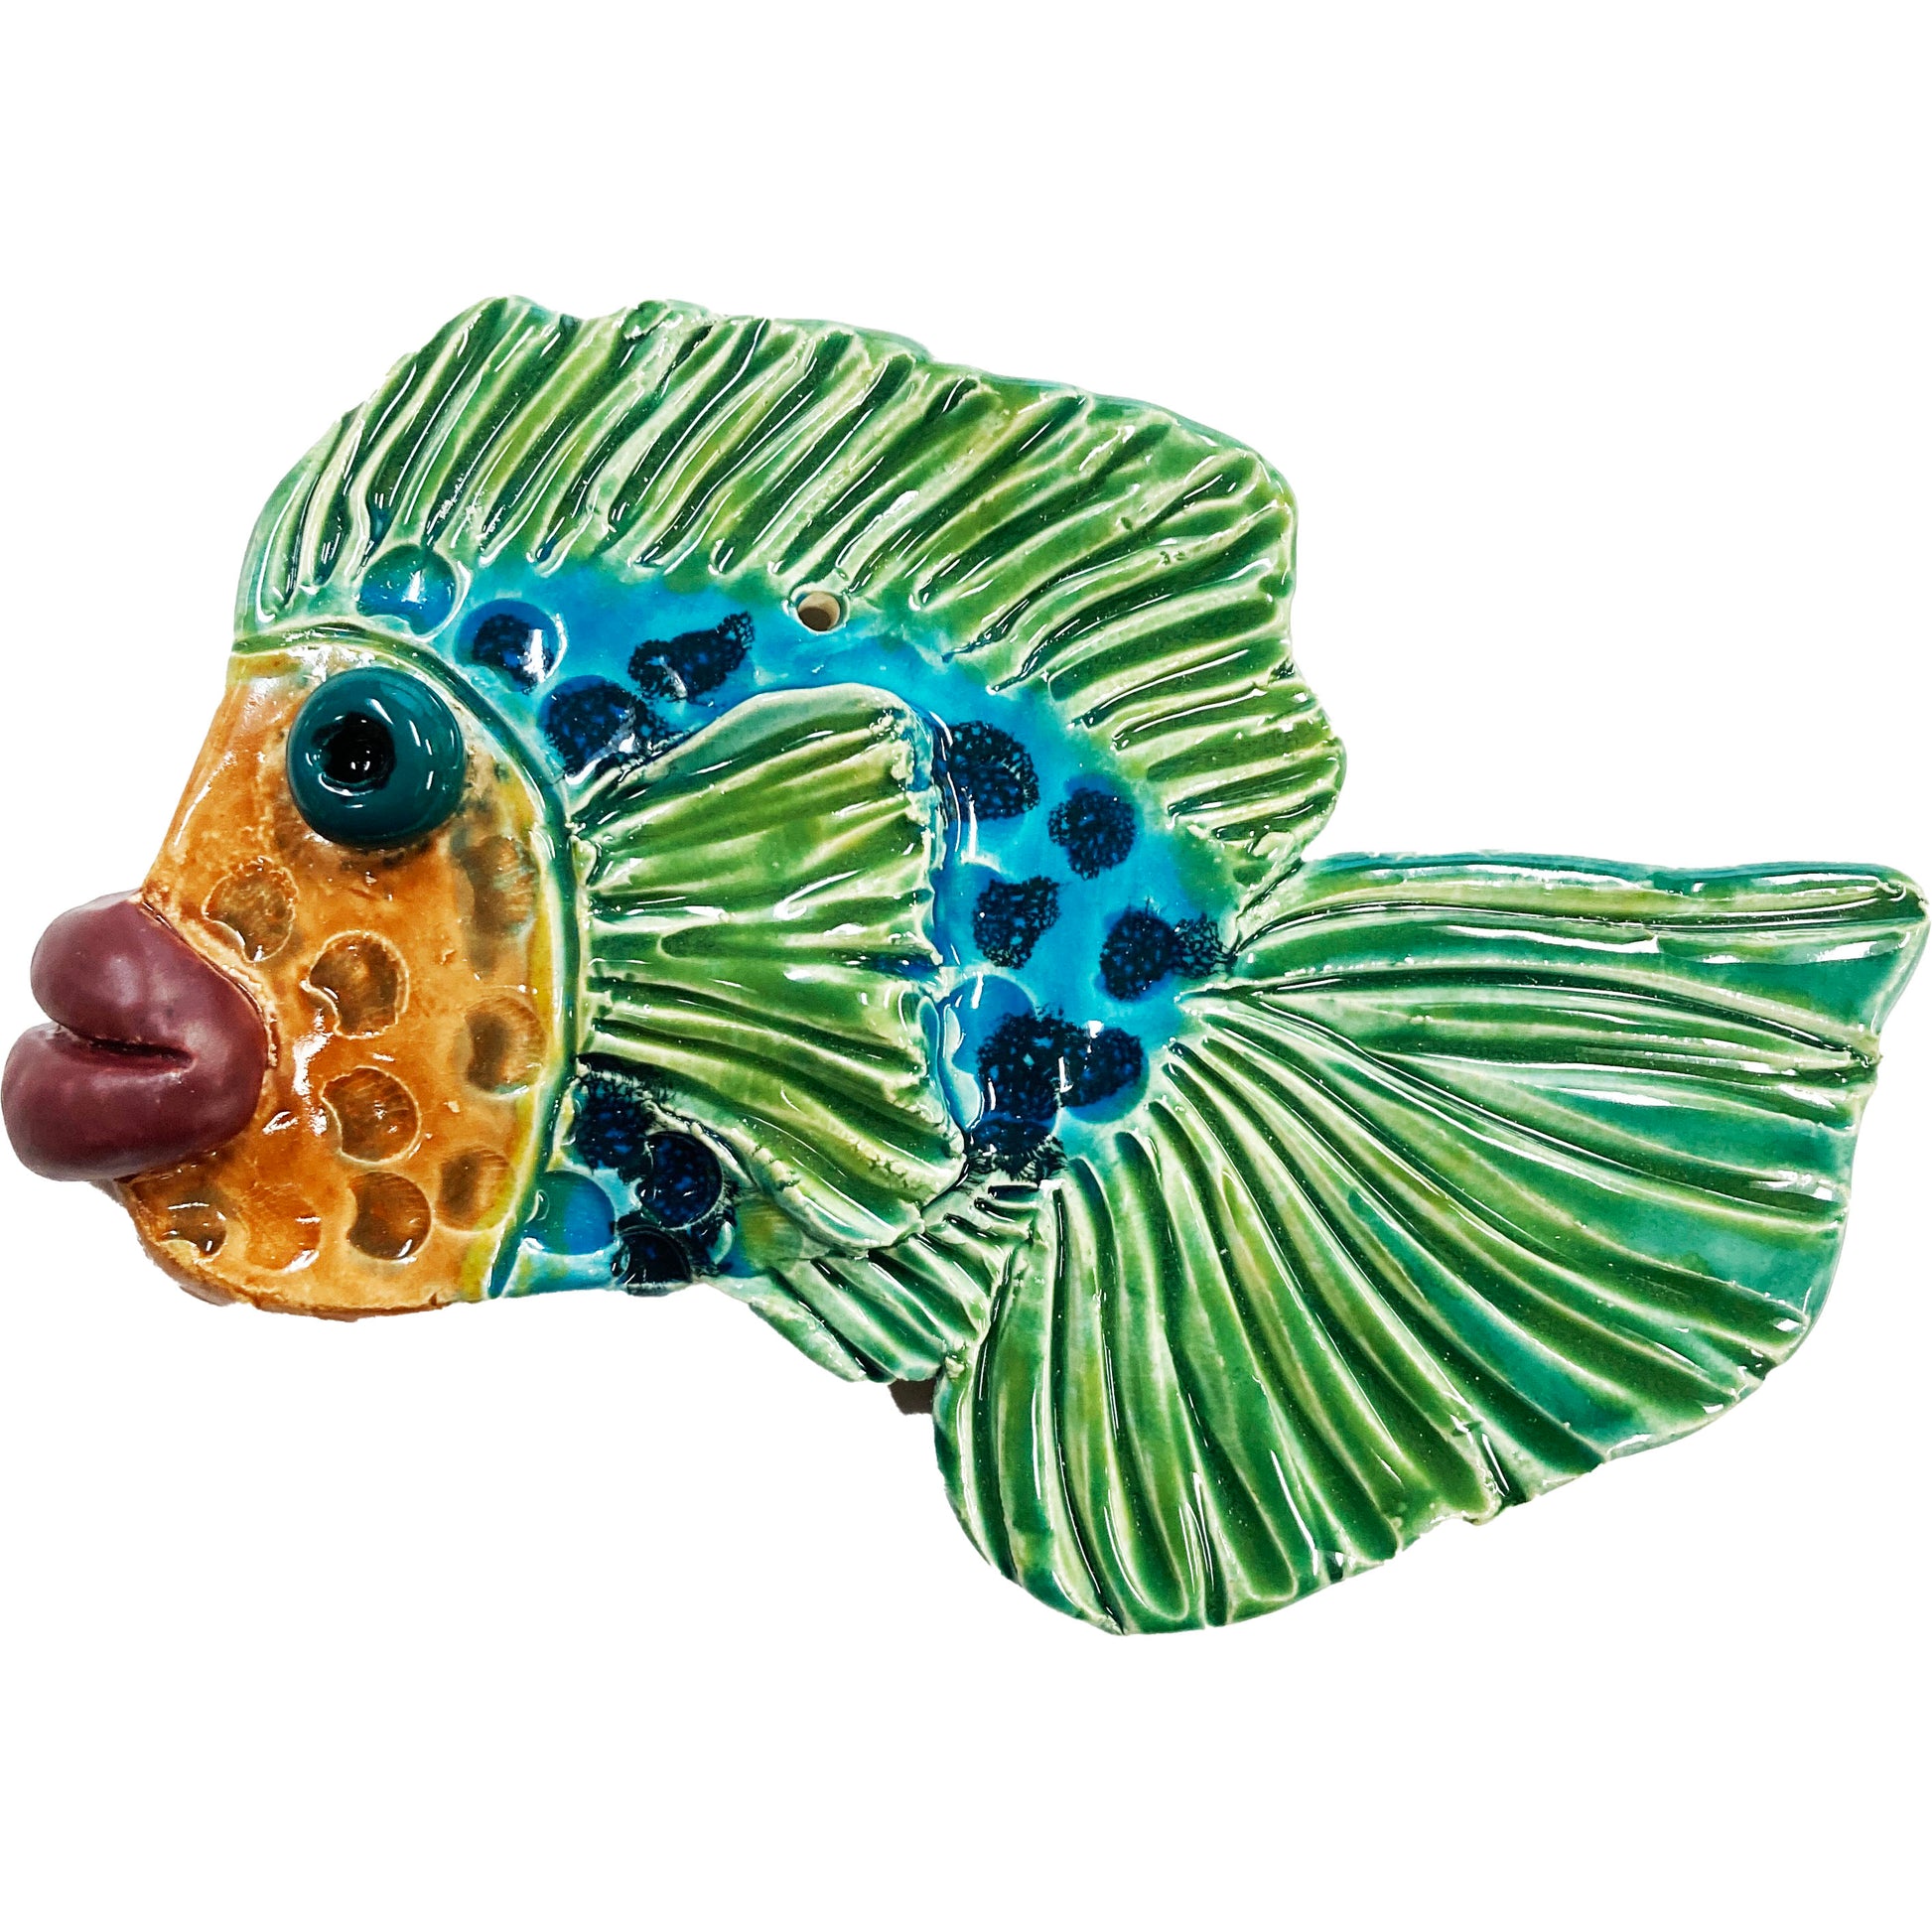 WATCH Resources Art Guild - Ceramic Arts Handmade Clay Crafts Fresh Fish 6.5-inch x 4.5-inch Glazed Fish by Lynn Stahl